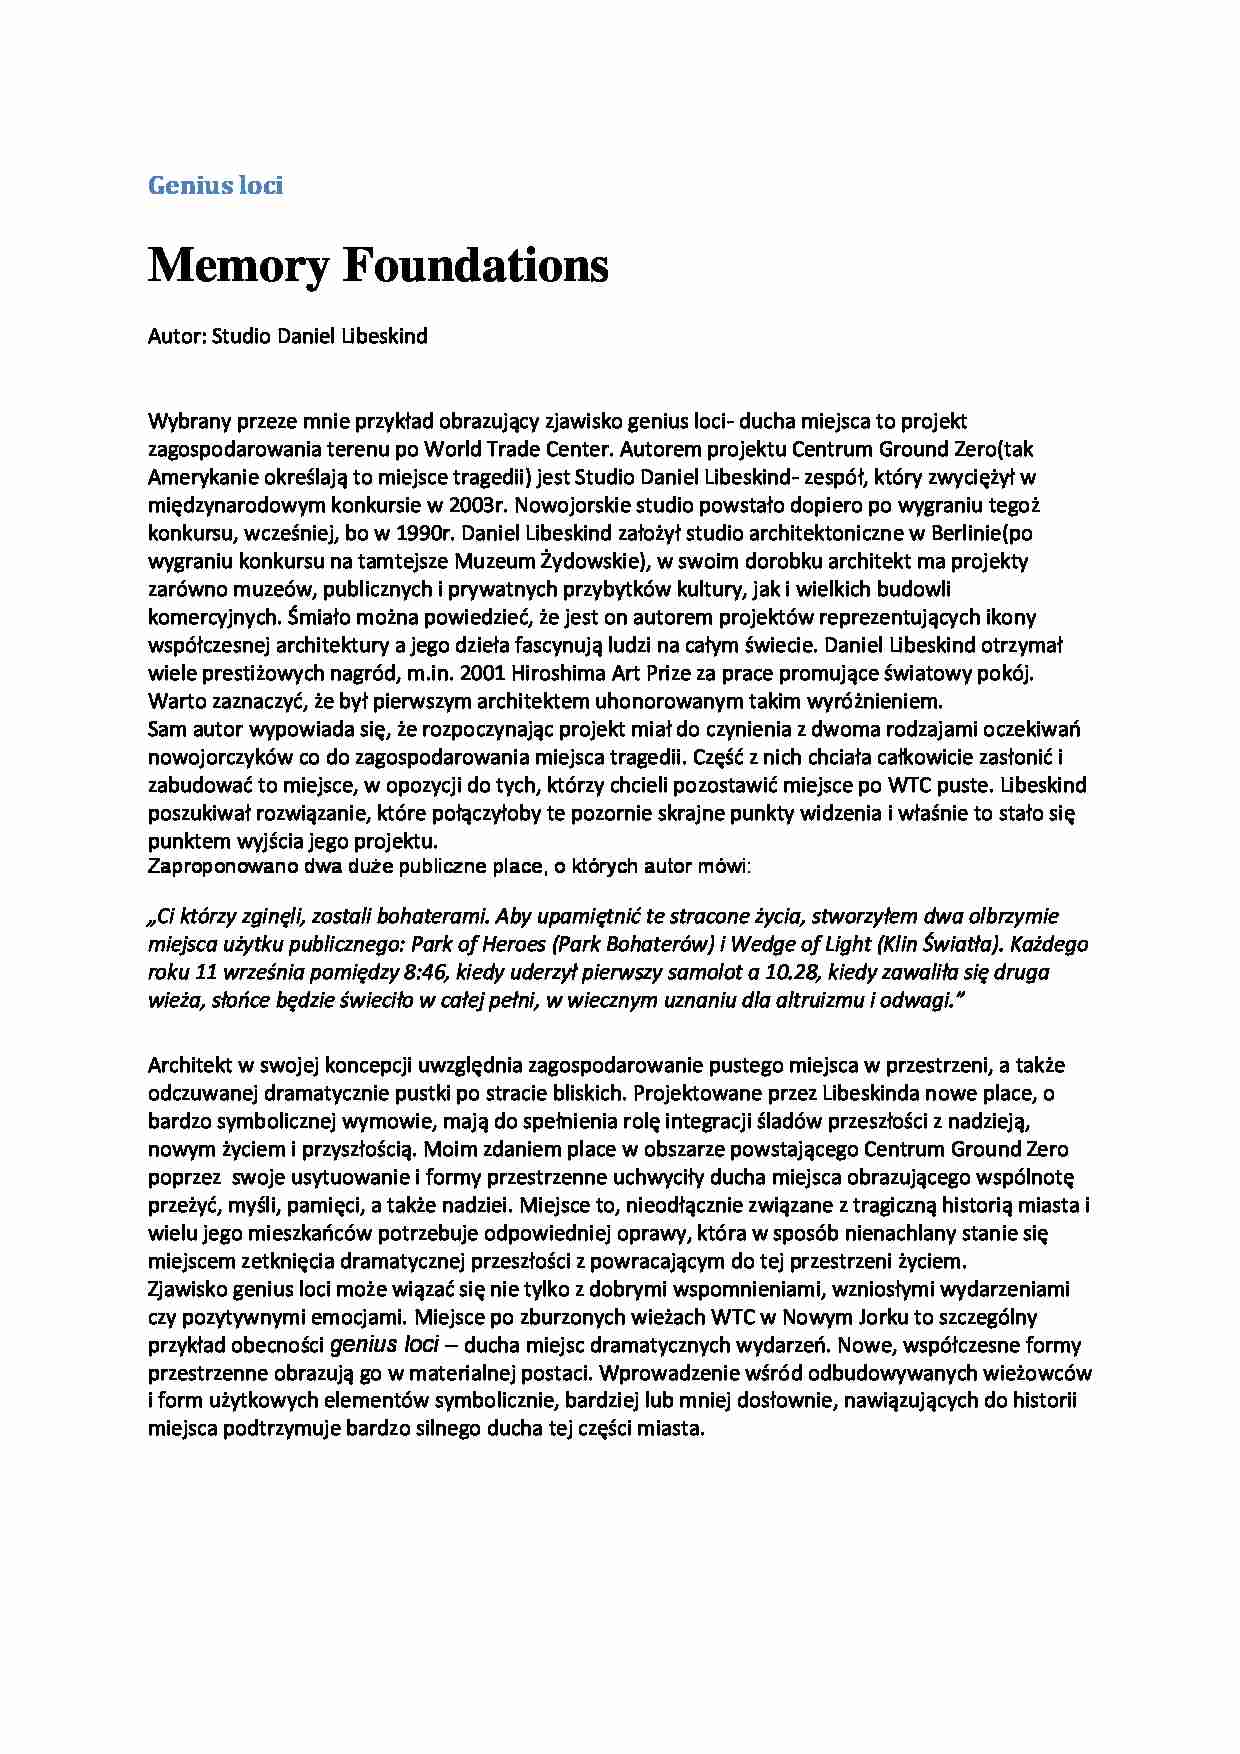 Memory foundations- Genius loci referat - strona 1